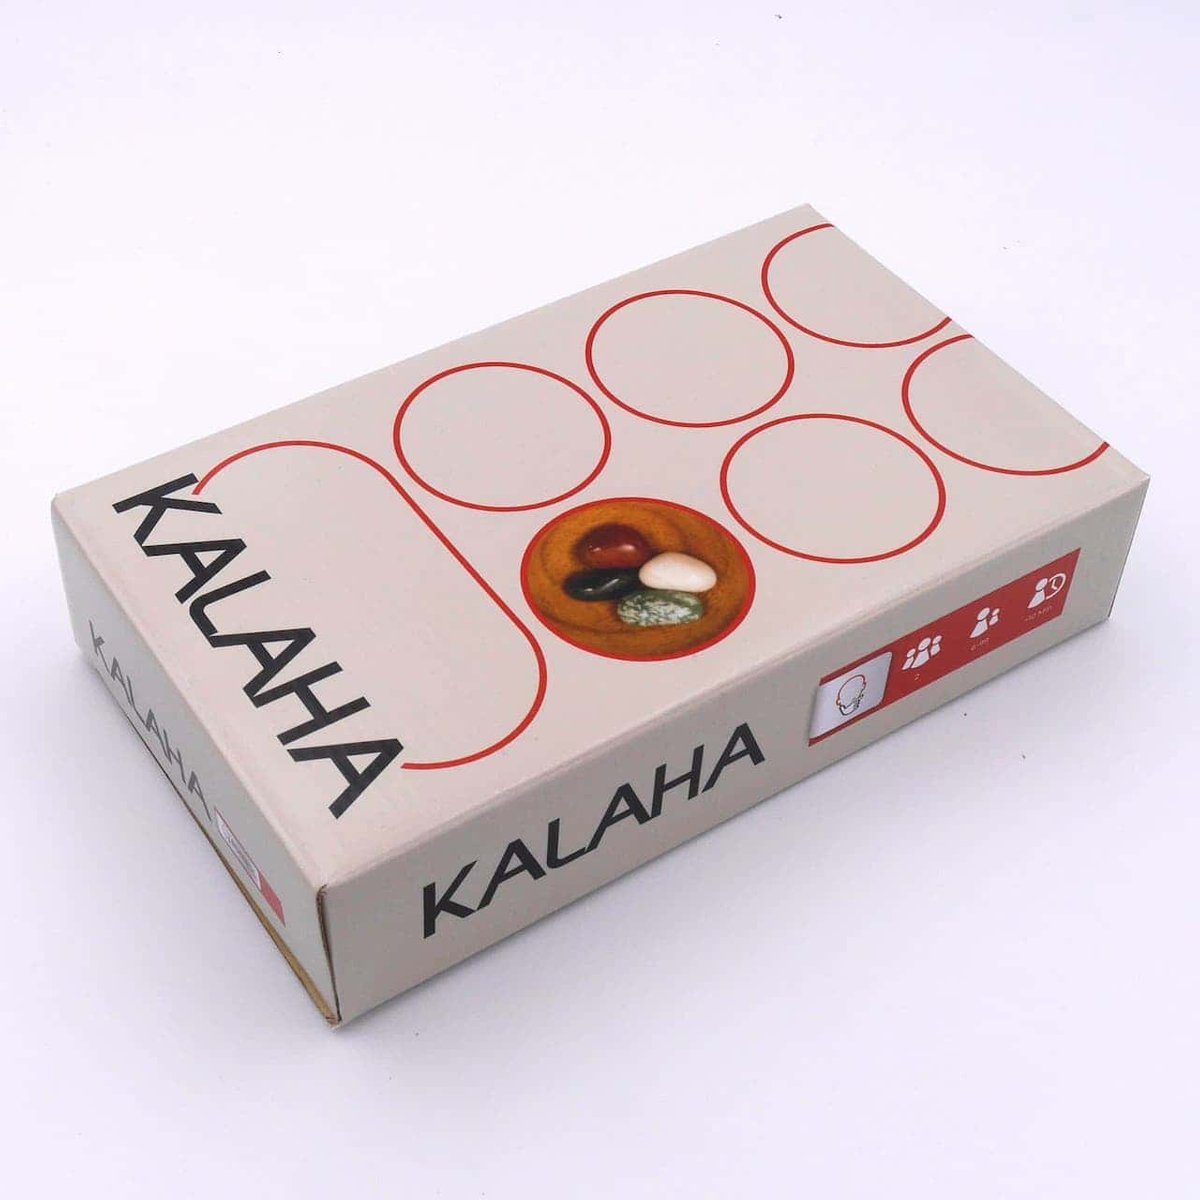 Brettspiel inkl. Kalaha hochwertiges Halbedelsteine Spiel, Steinchenspiel Halbedelsteinen, - Holzspiel Denkspiele einfarbig, ROMBOL